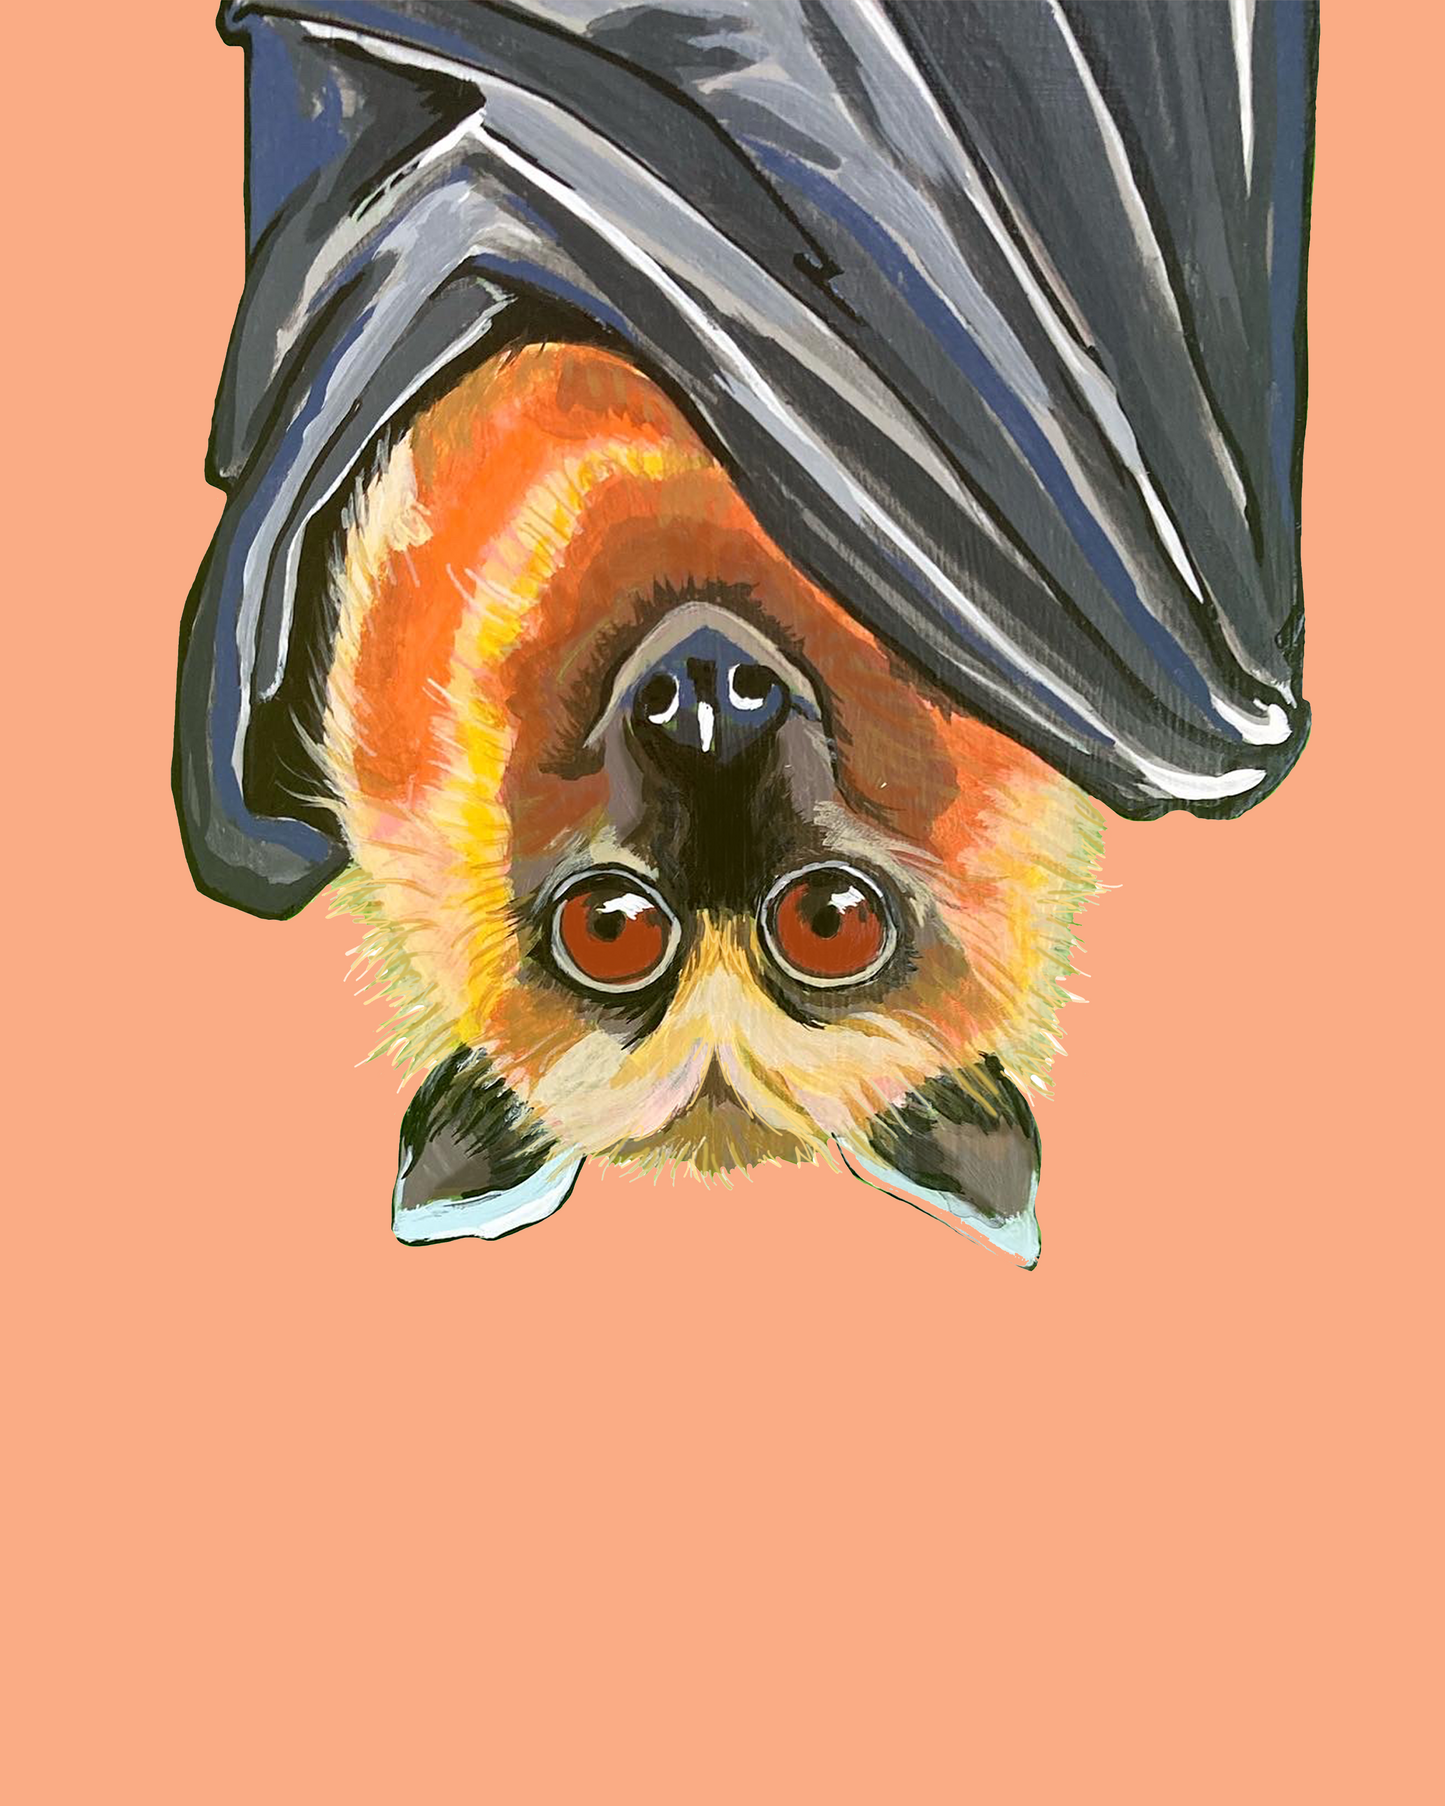 Barnabee the Bat